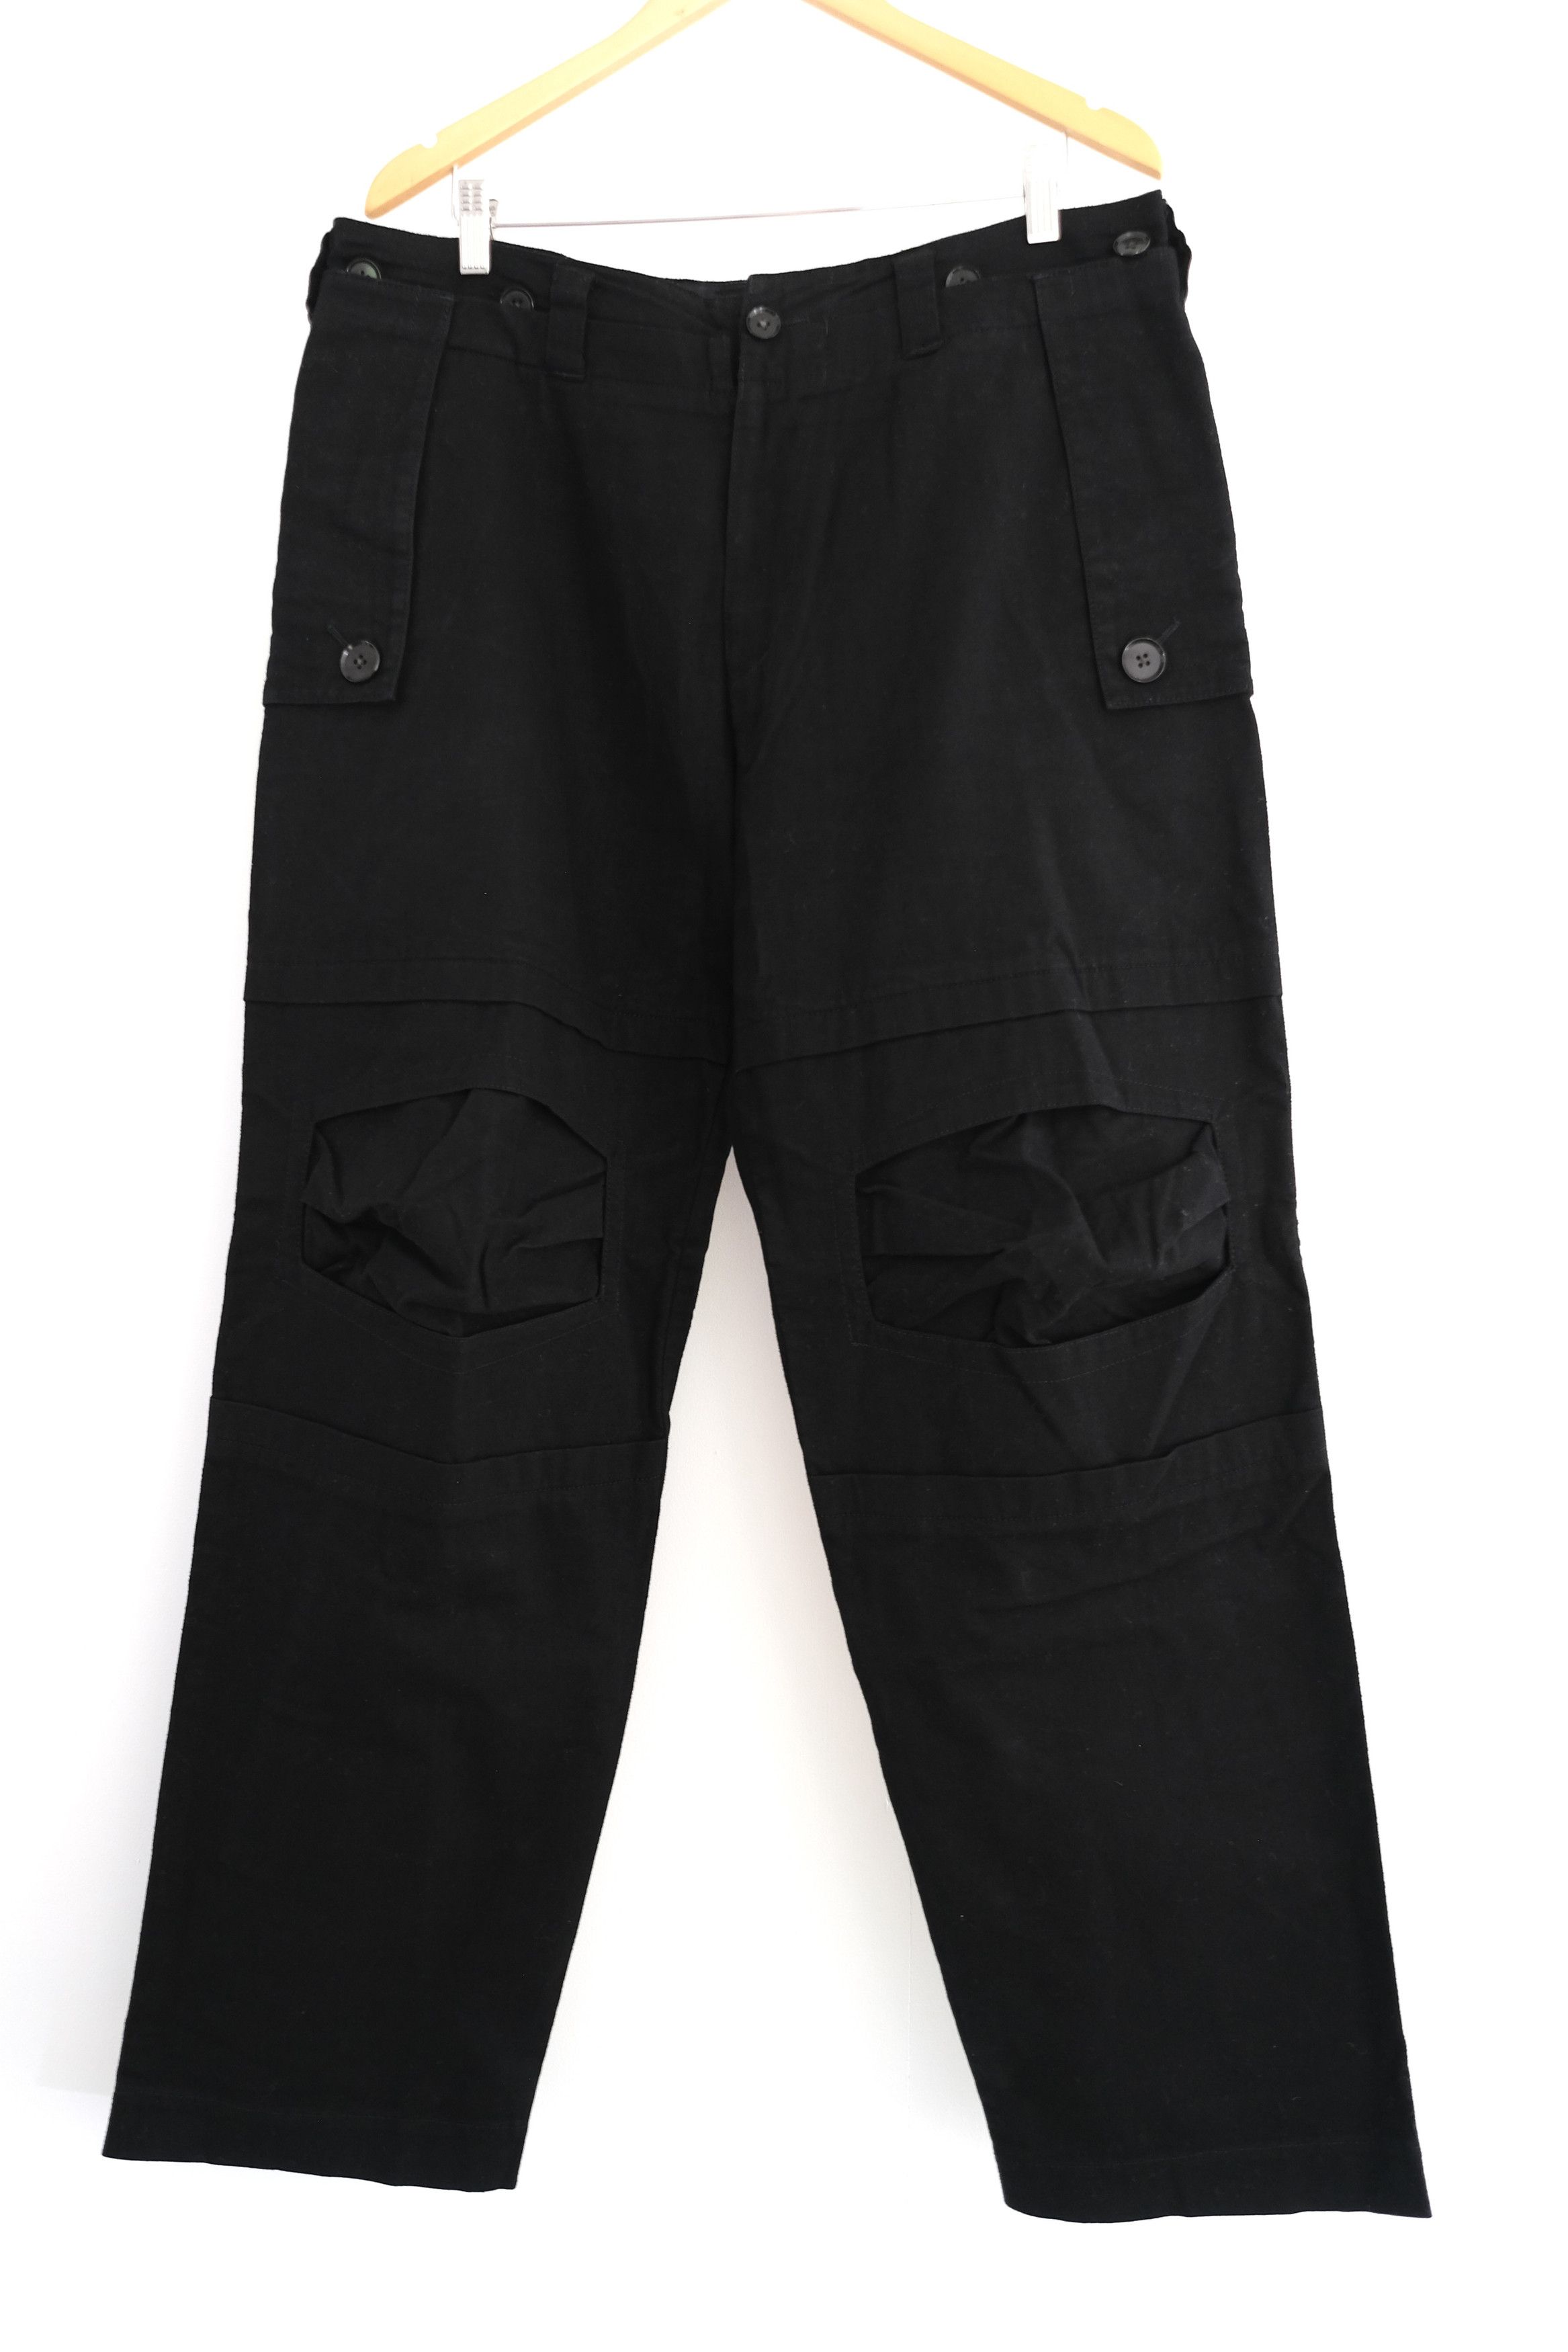 2000s Linen-Cotton Hem Button and Shadowbox Knee Pants - 2